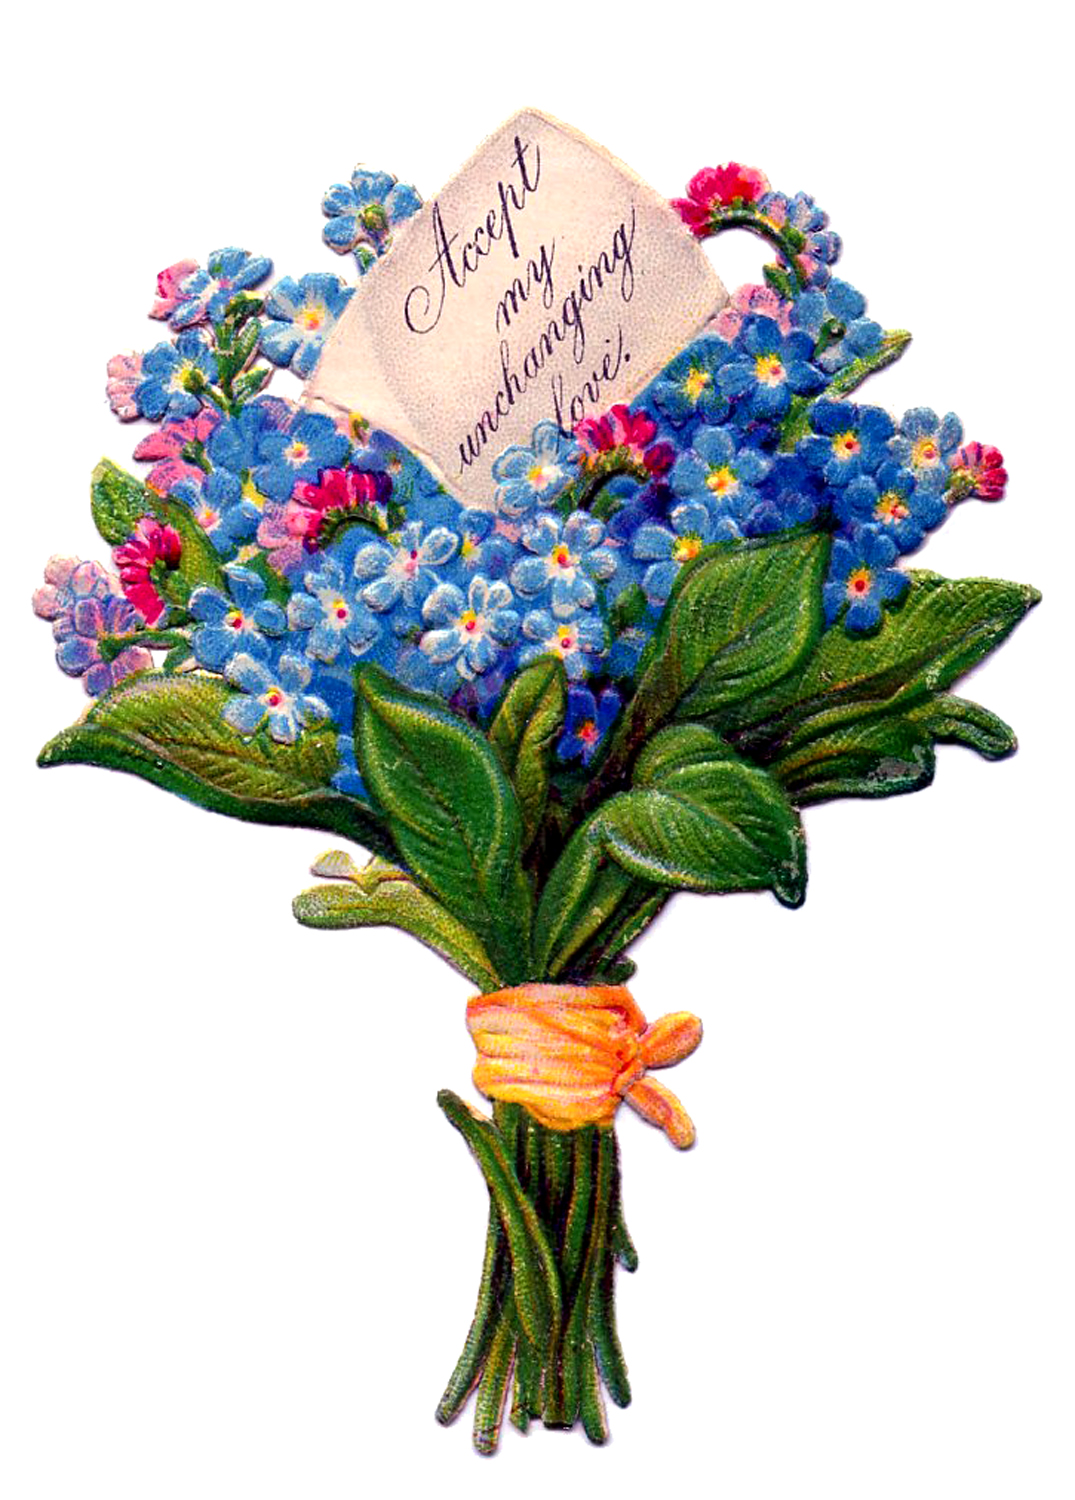 flower bouquet clip art free download - photo #35